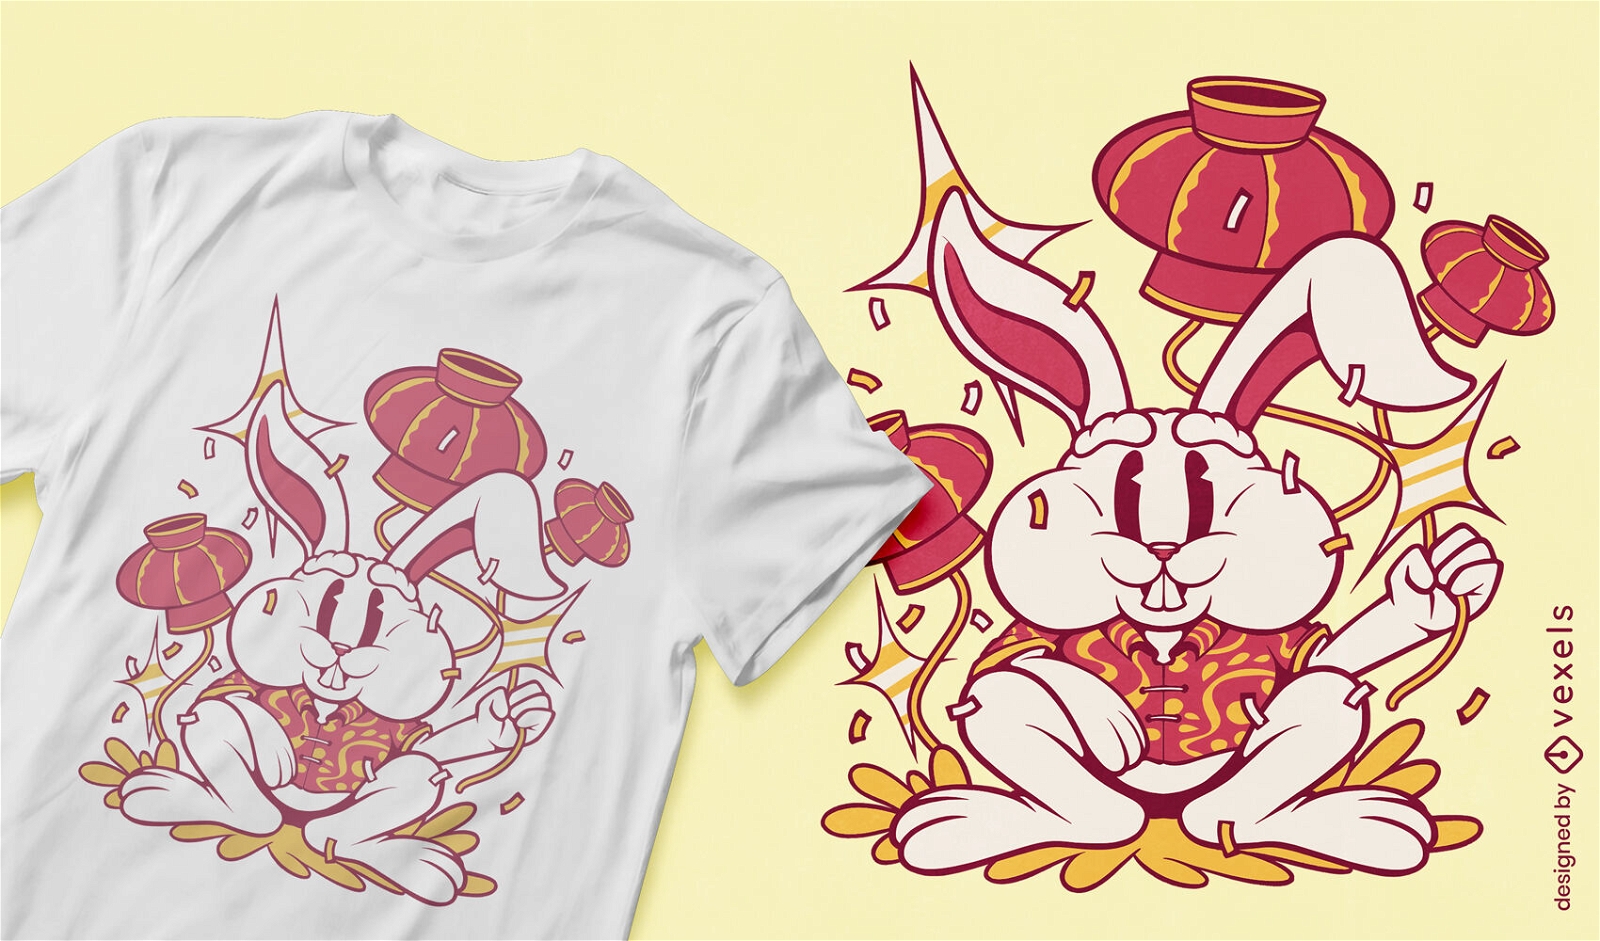 Dise?o de camiseta de conejo lindo a?o nuevo chino